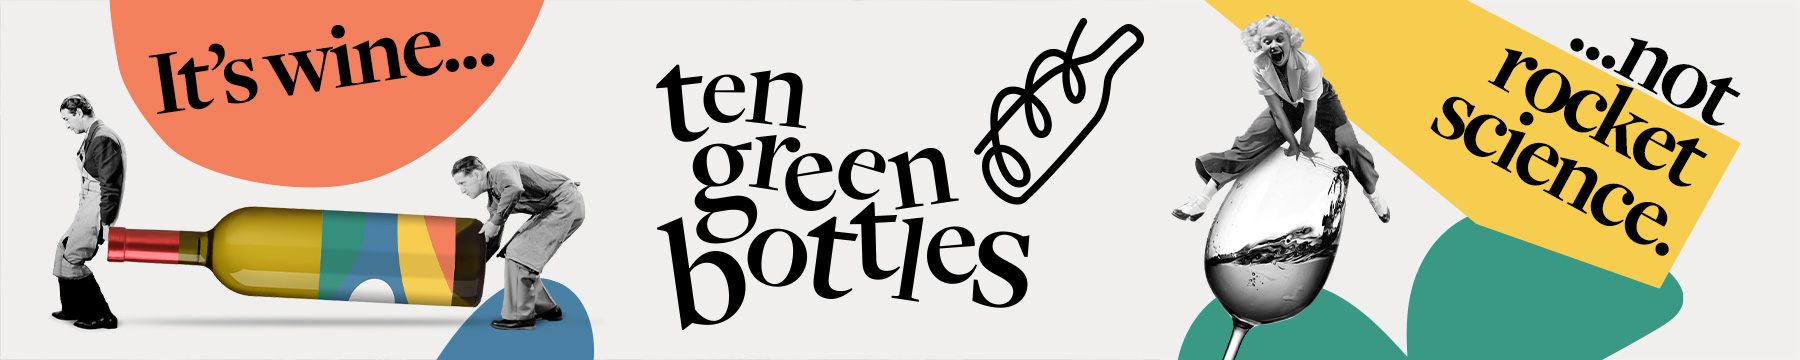 Ten Green Bottles Brighton: Wine Bar, Wine Tasting